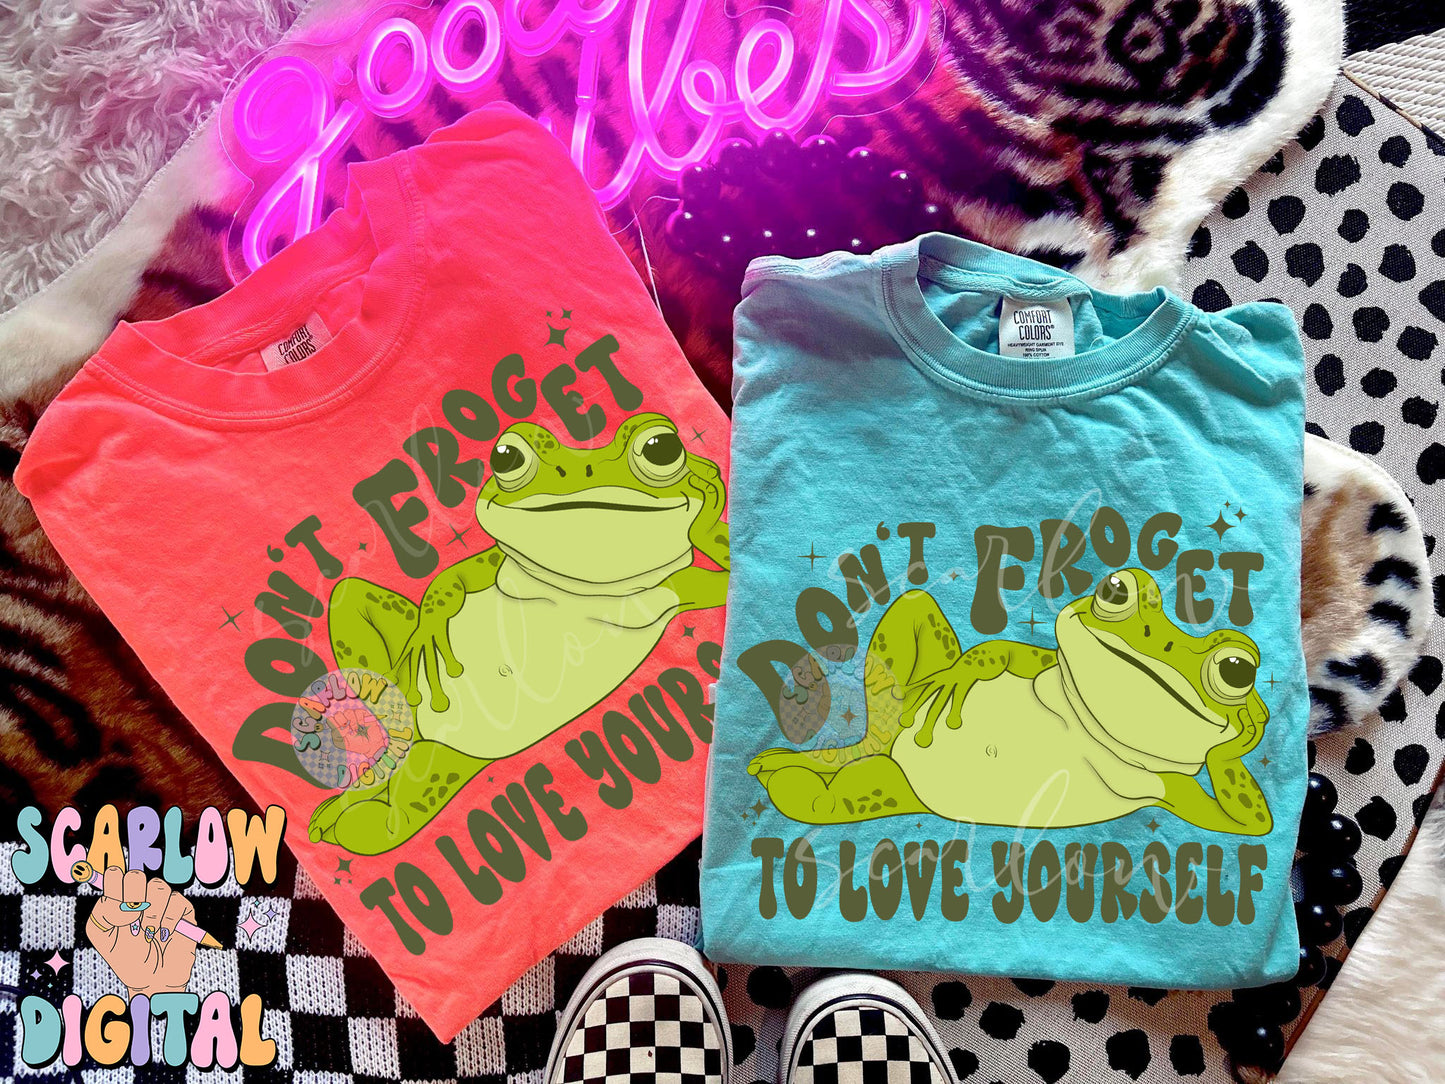 Don't Froget to Love Yourself PNG Digital Design Download, frog png, adult humor png, self love png, funny tshirt designs, snarky designs